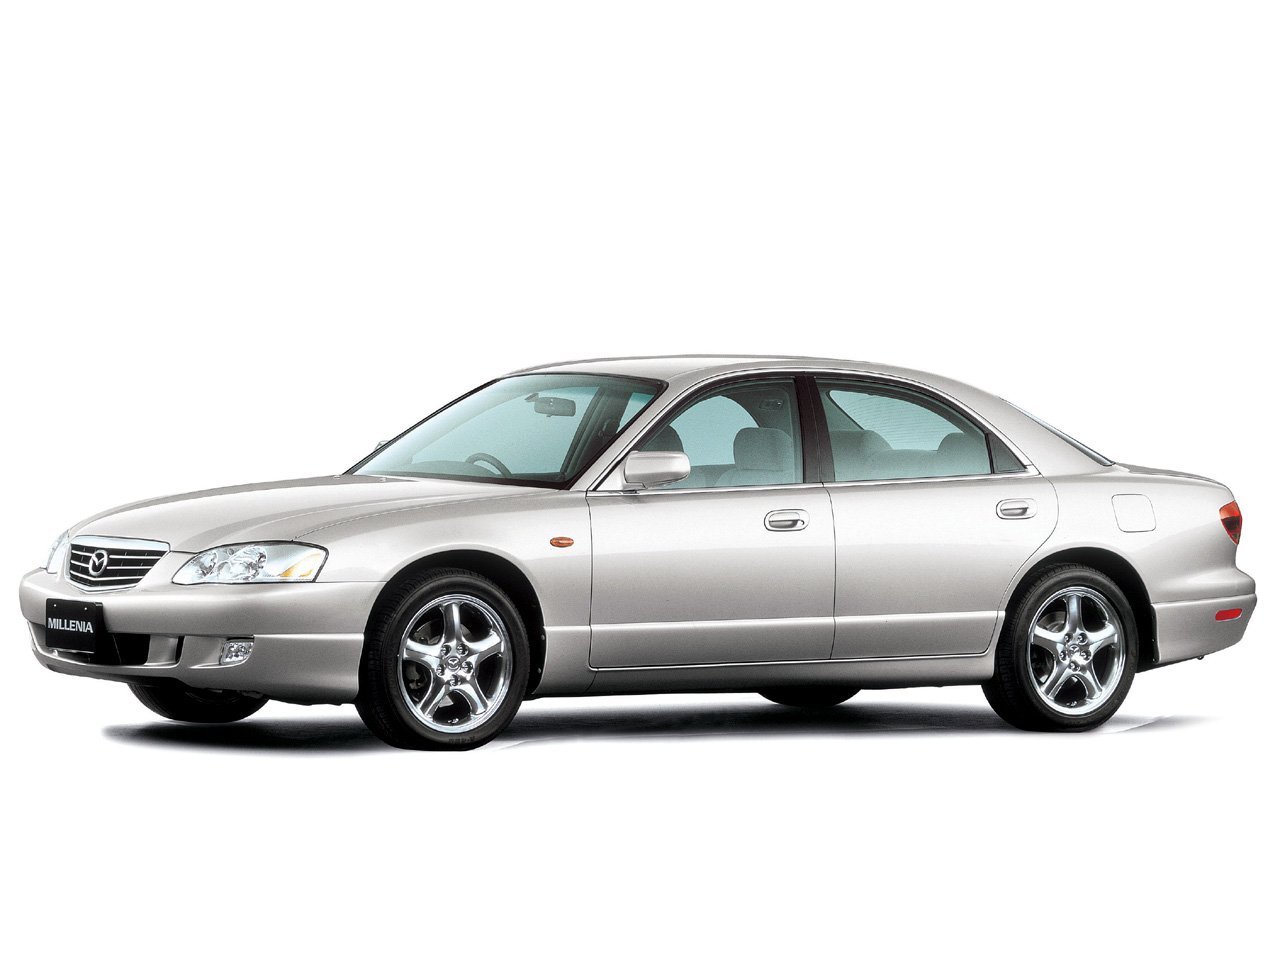 седан Mazda Millenia 2000 - 2002г выпуска модификация 2.0 MT (160 л.с.)